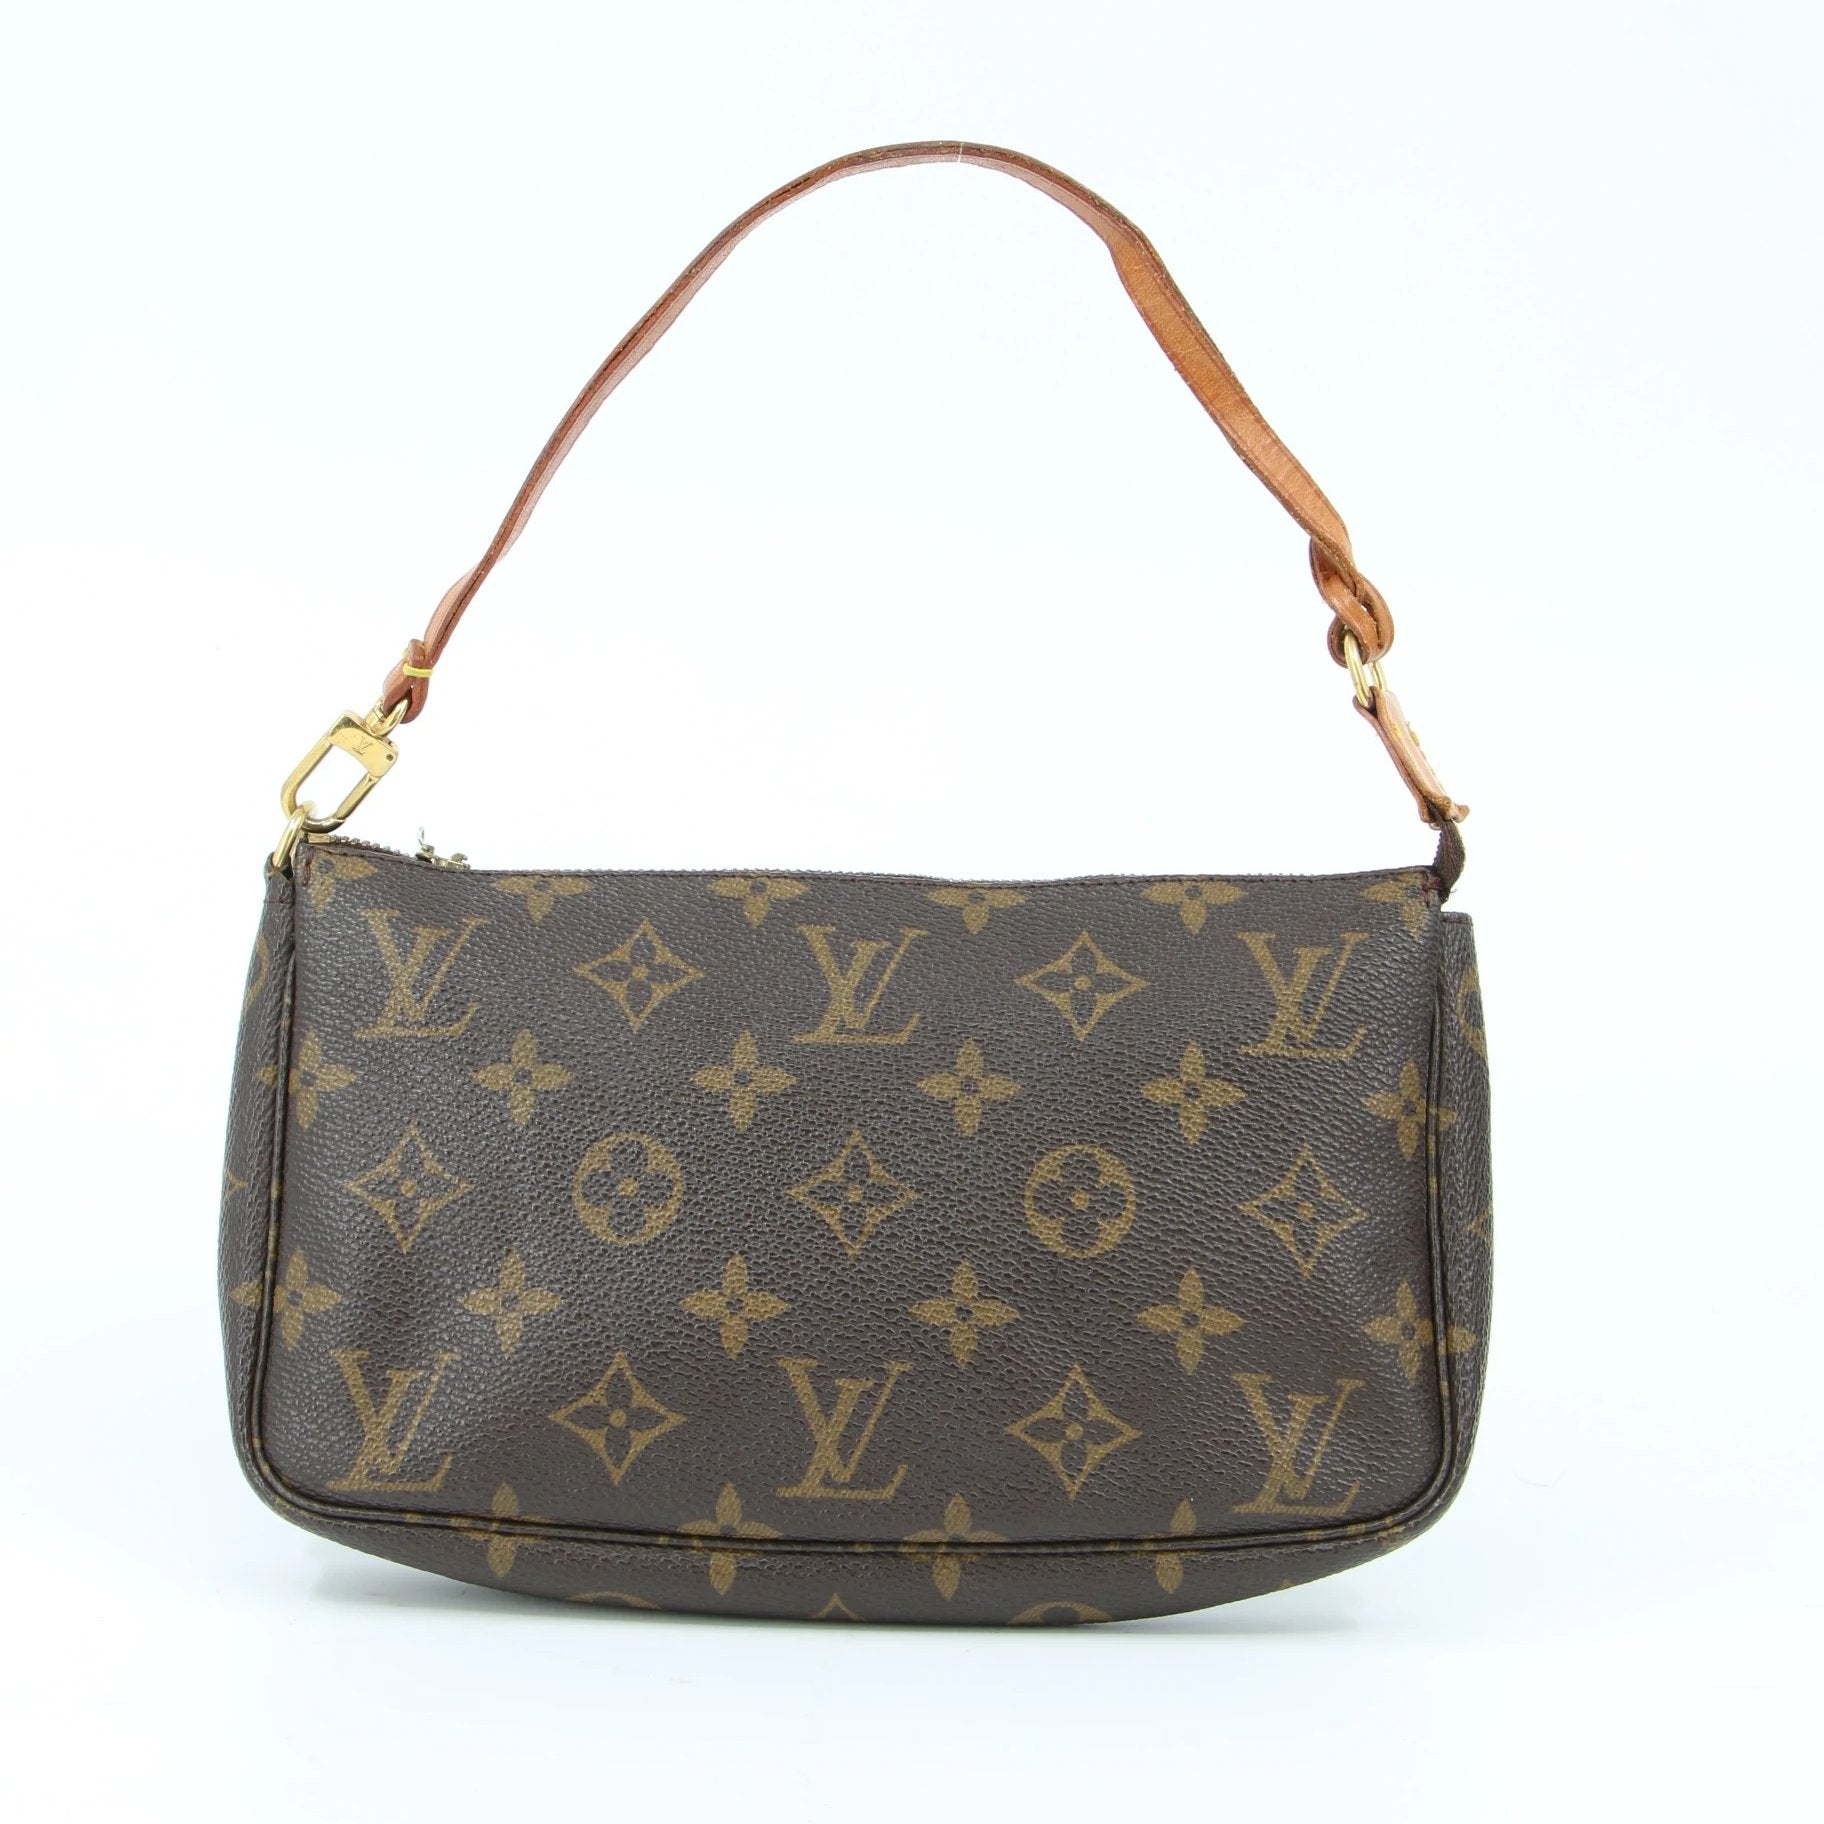 Vuitton - Buy next Louis Vuitton Bag at Collector's – Collectors cage